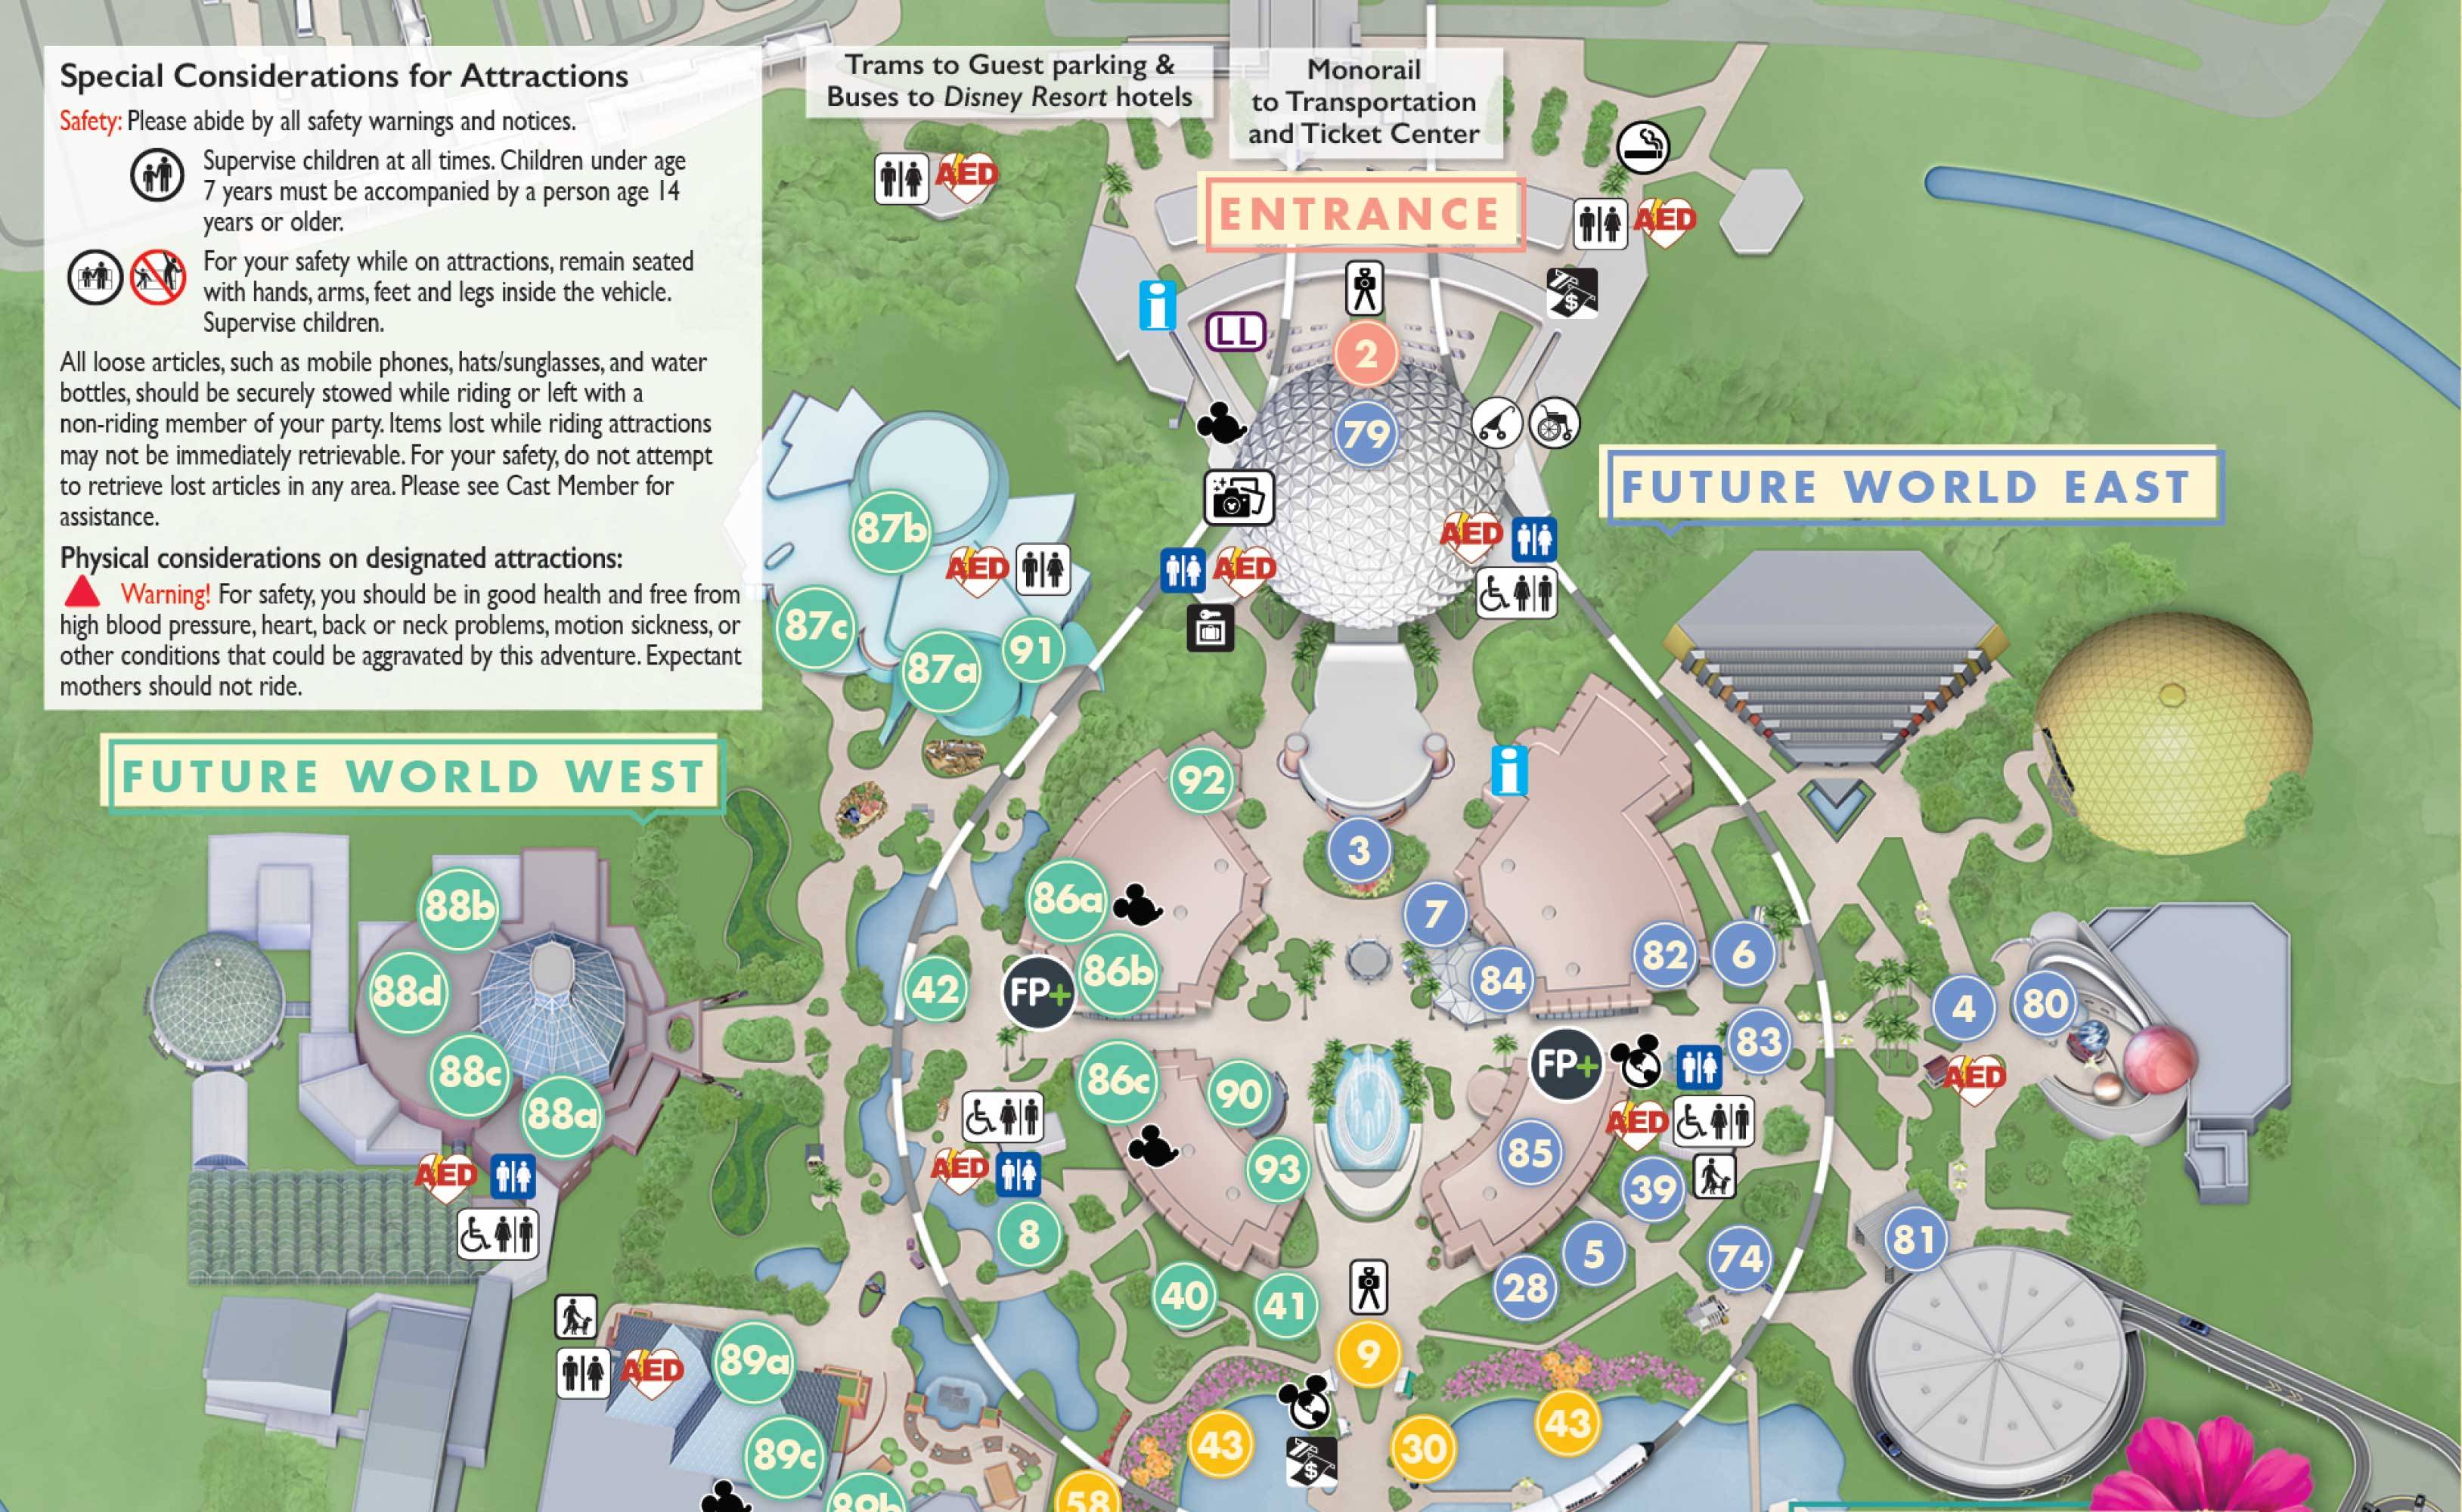 PHOTOS - Location of Walt Disney World theme park smoking areas outside of the park entrances